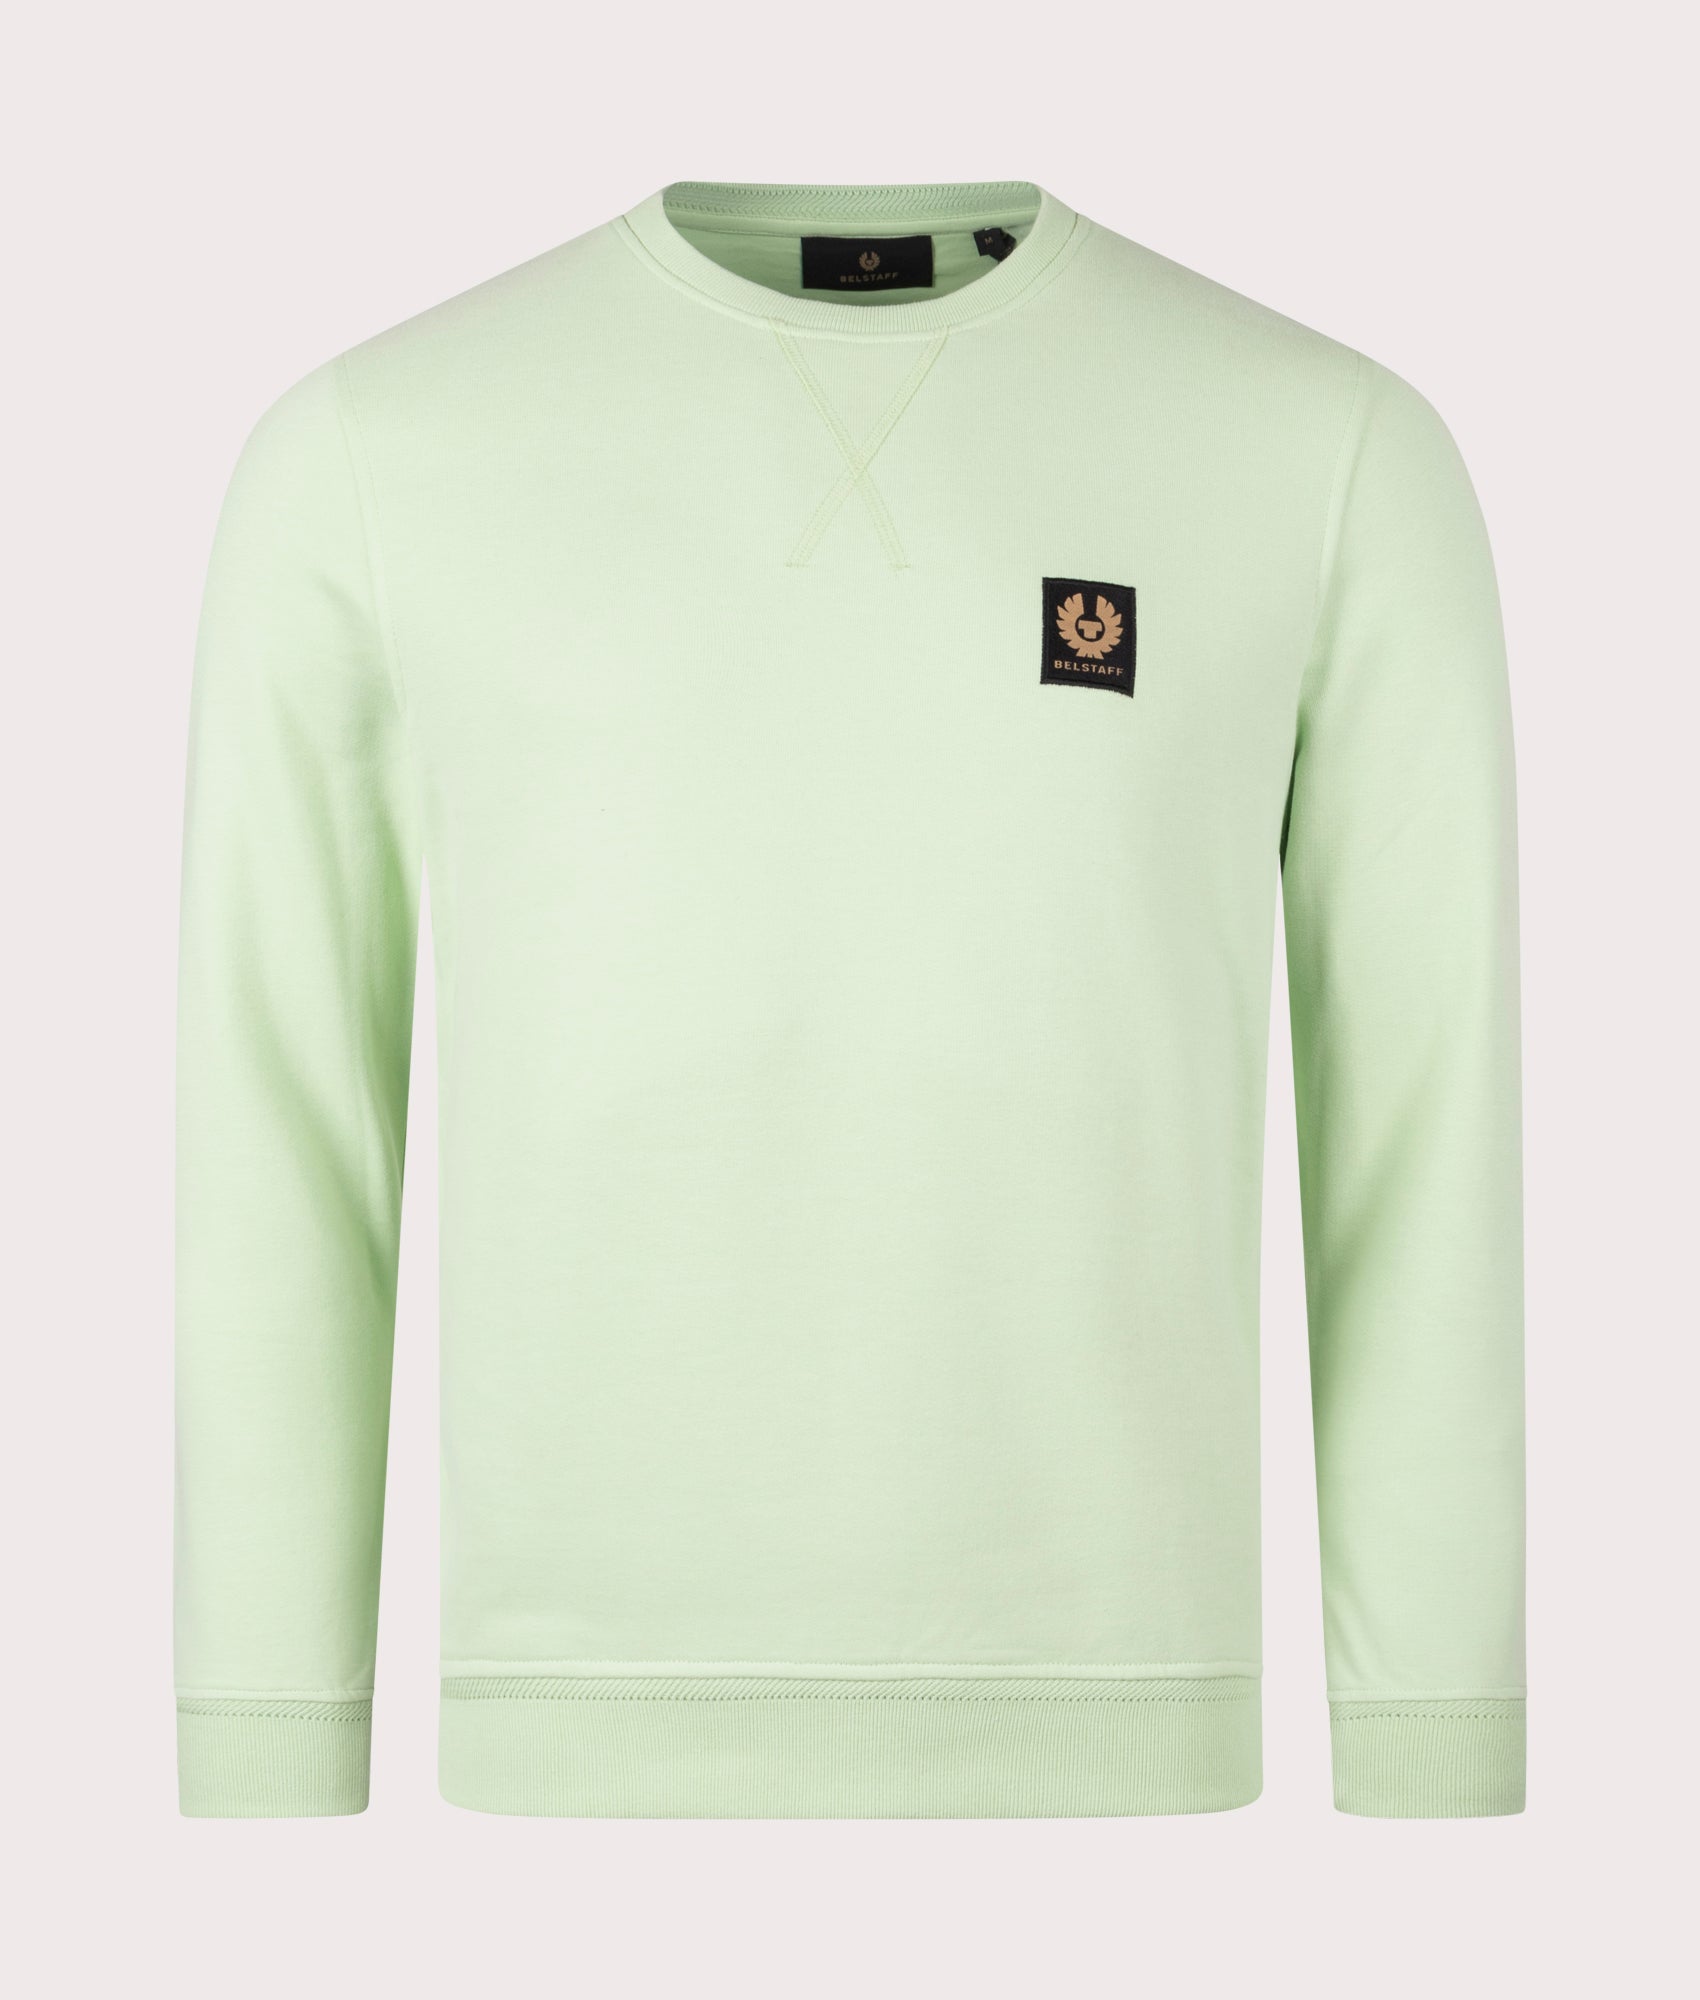 Belstaff Mens Belstaff Sweatshirt - Colour: New Leaf Green - Size: XL